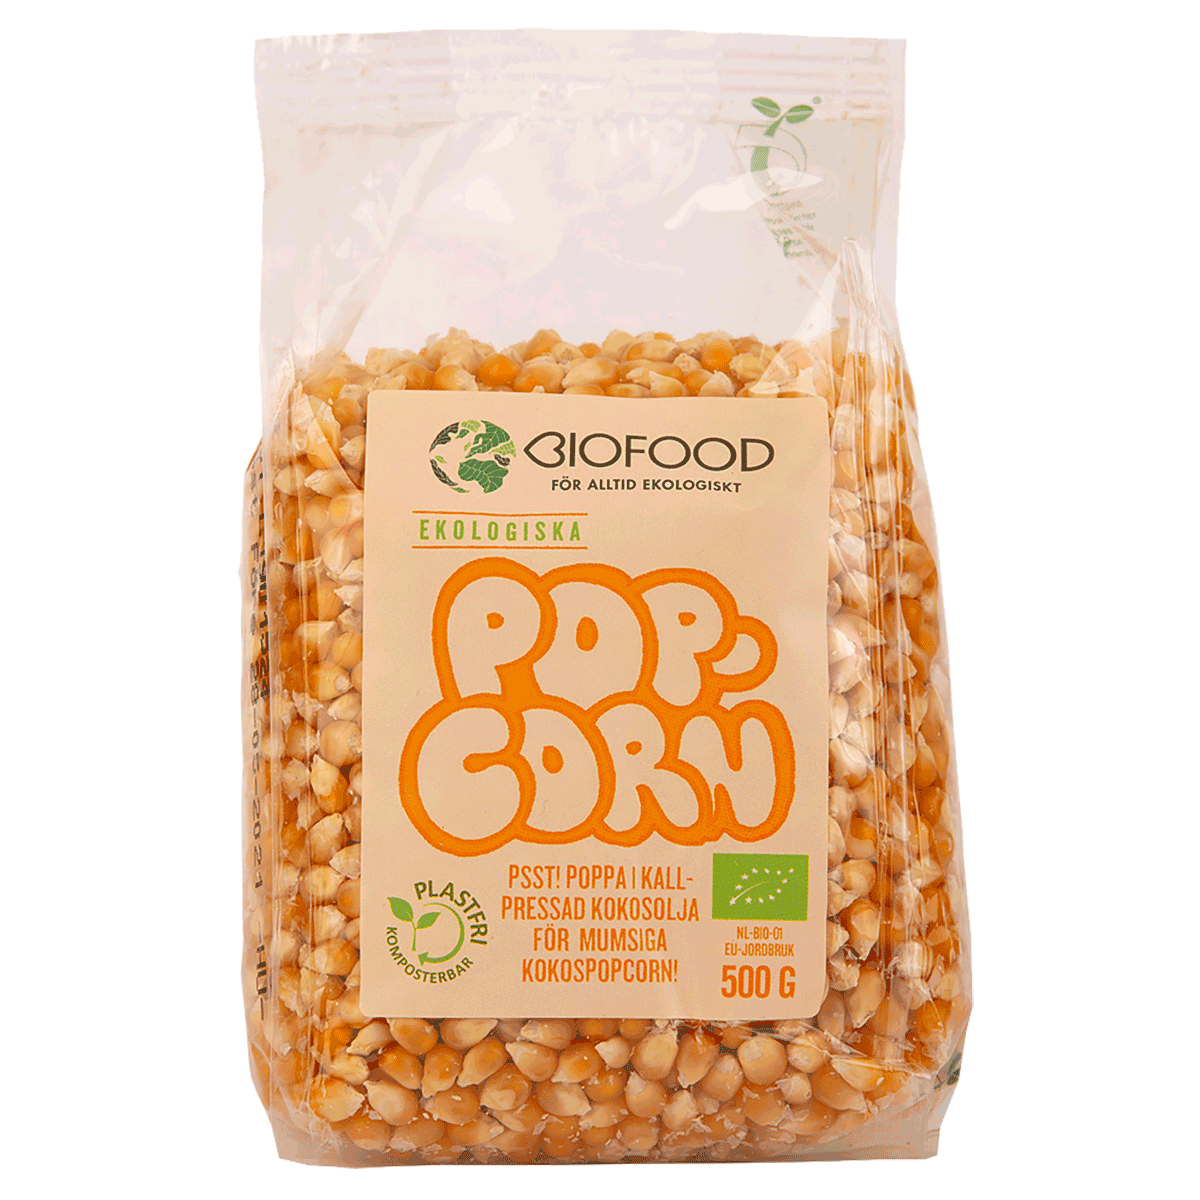 Biofood's Popcornkärnor'